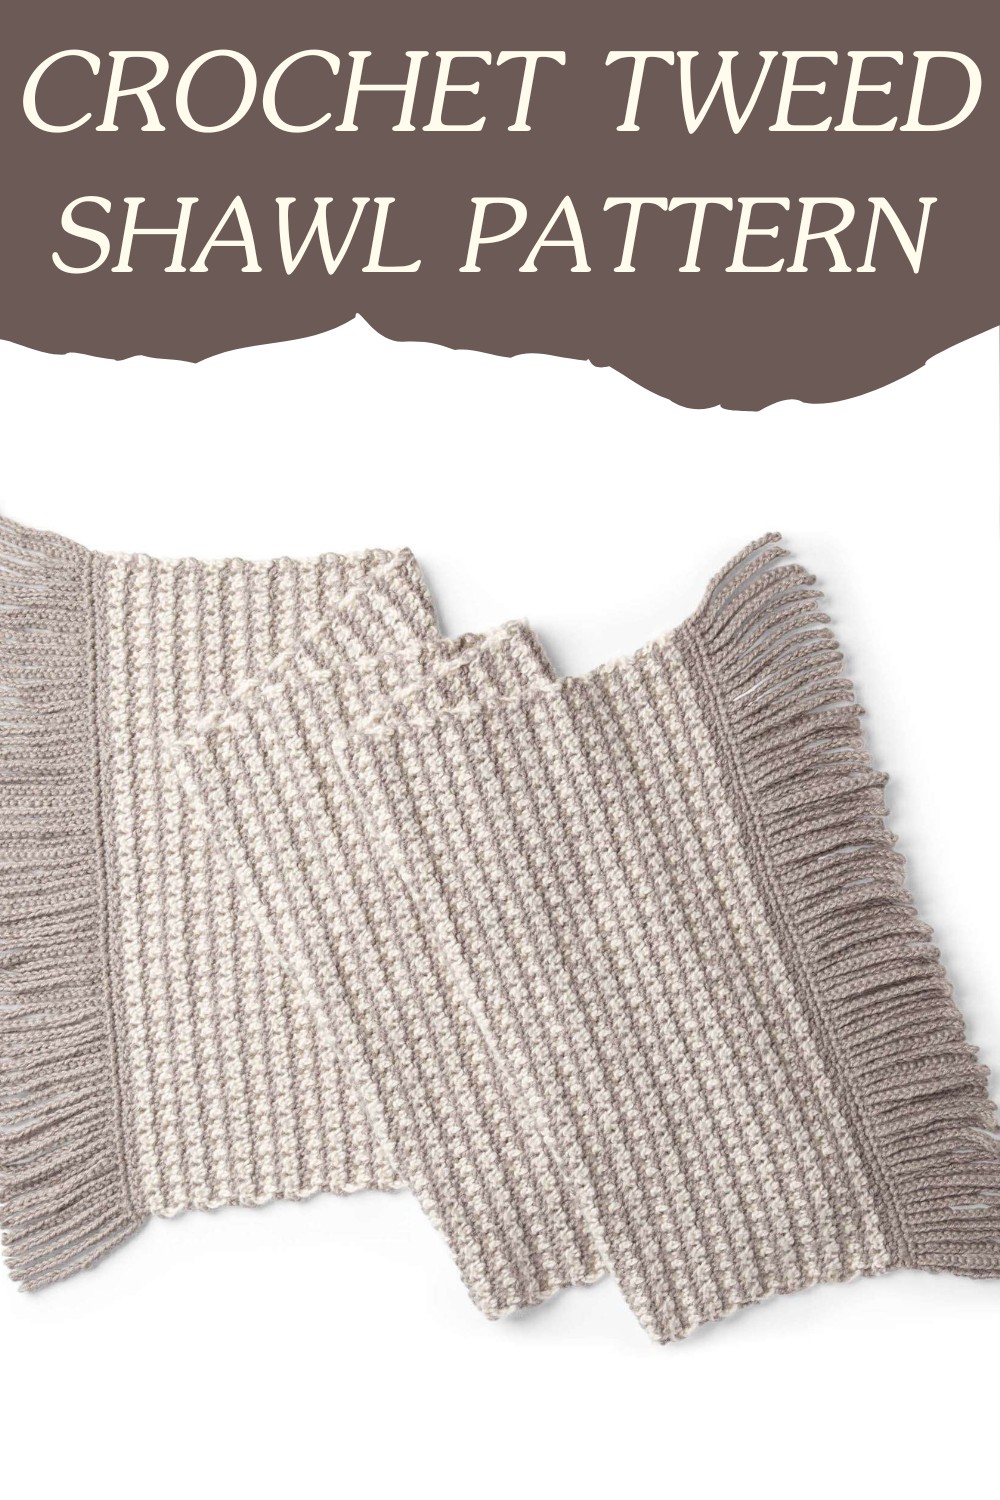 Crochet Tweed Shawl Pattern